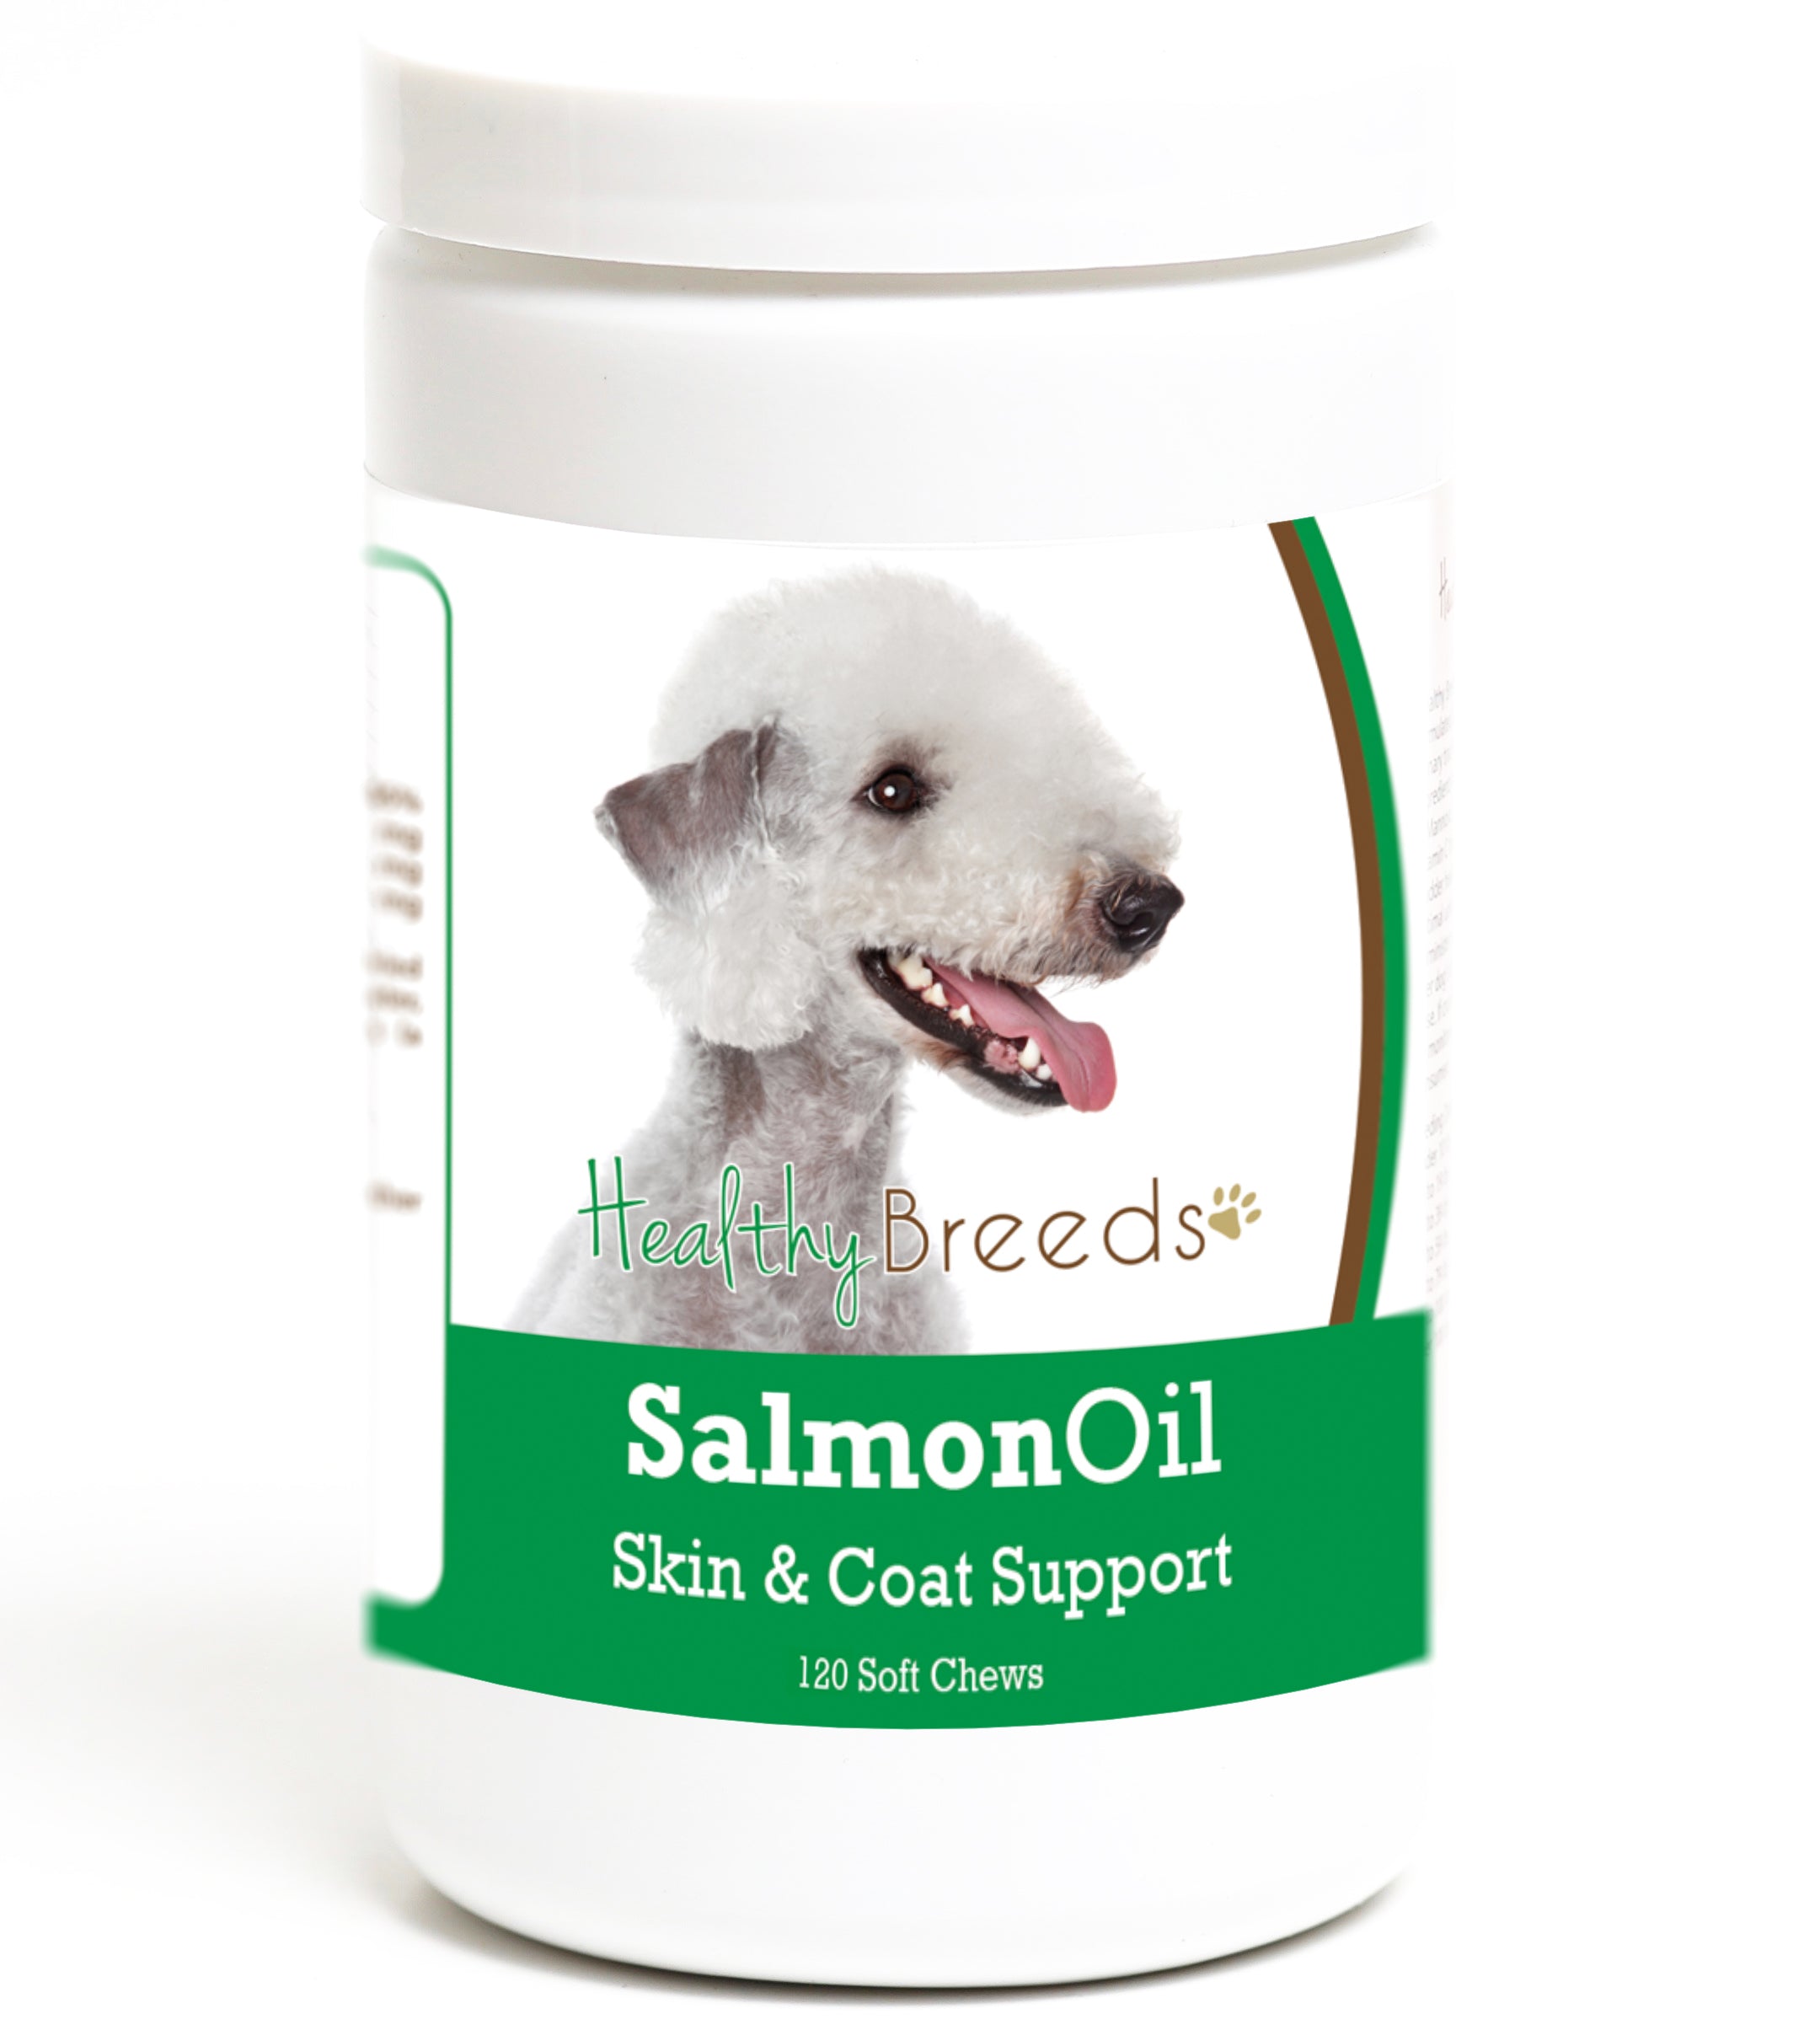 Bedlington Terrier Salmon Oil Soft Chews 120 Count